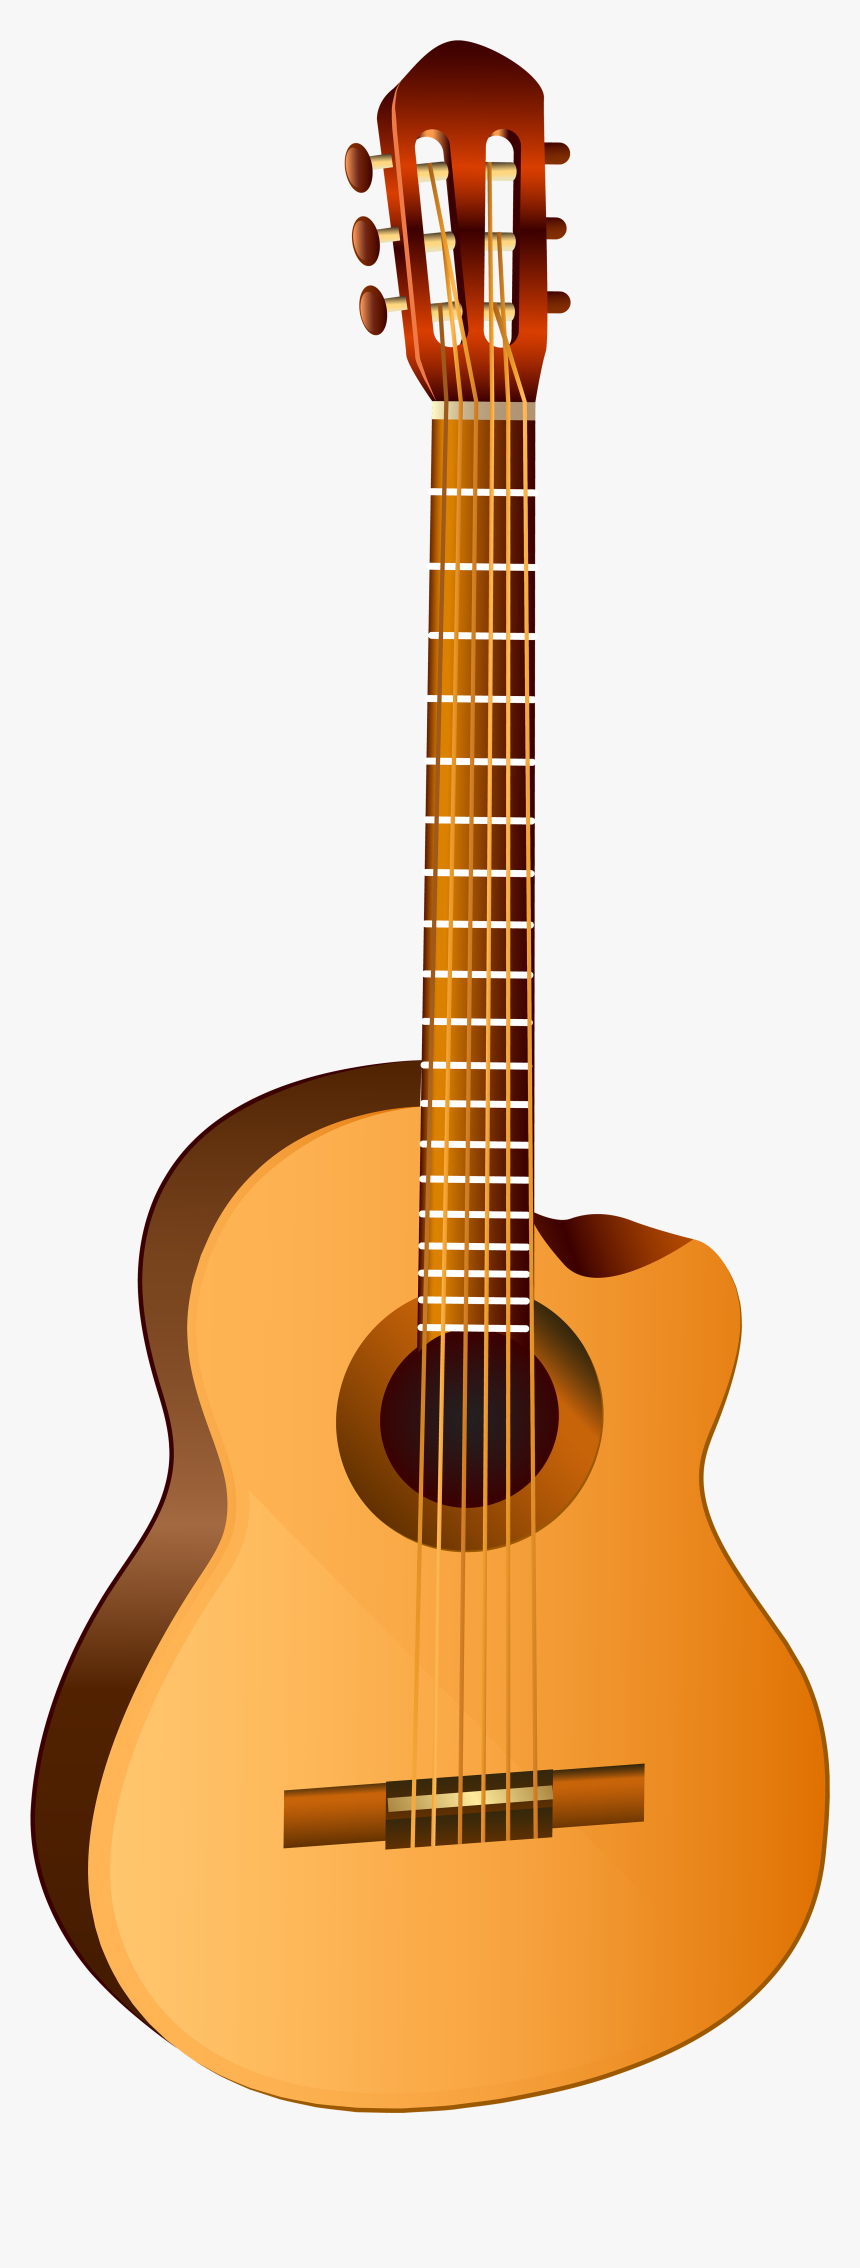 Transparent Guitar Outline Png - Martin Cs Bluegrass 16, Png Download, Free Download